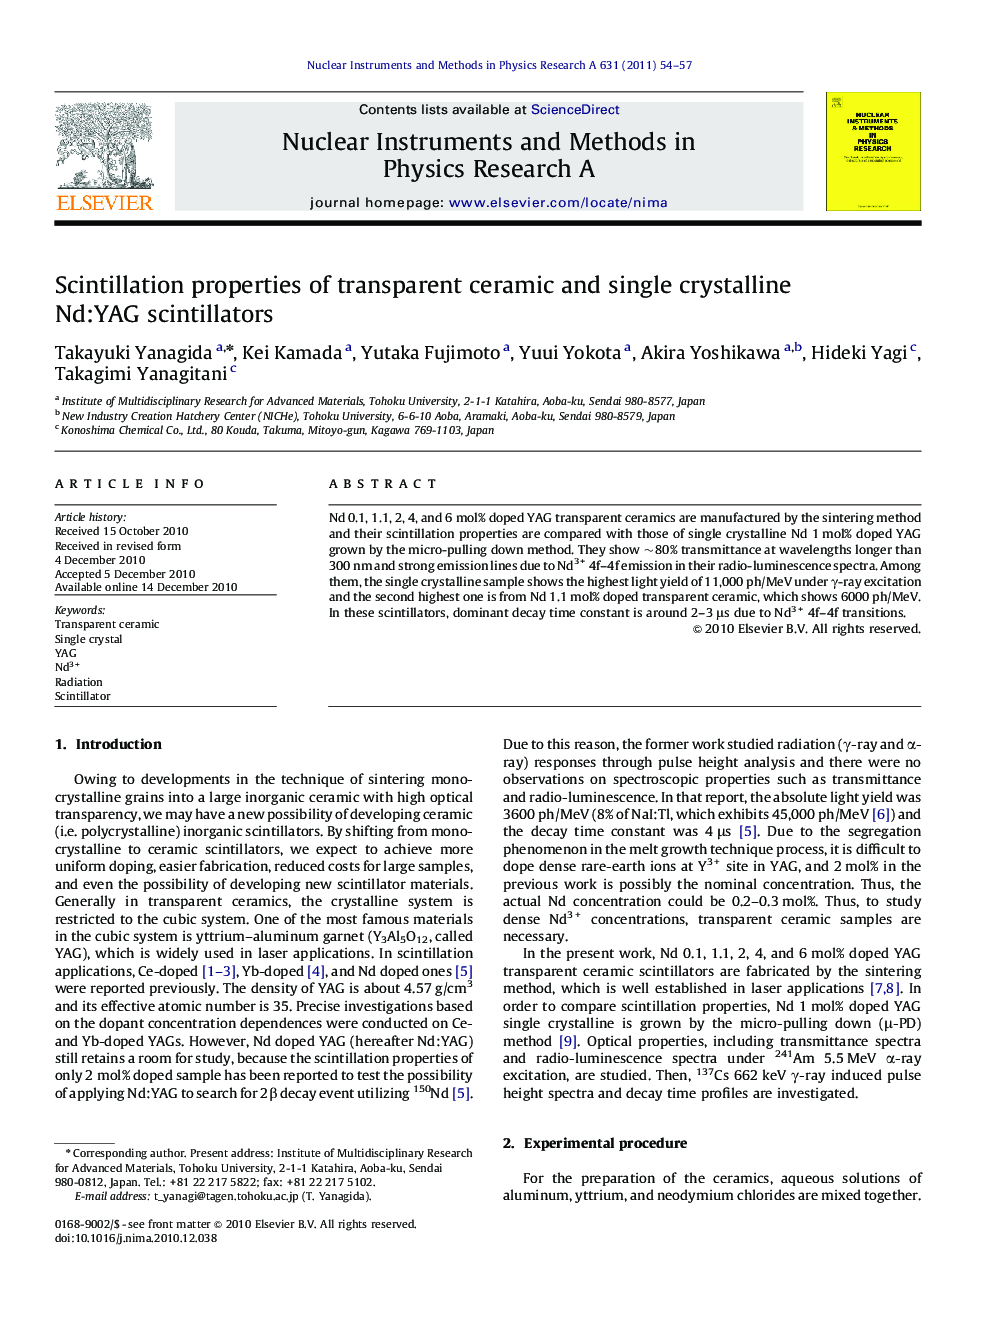 Scintillation properties of transparent ceramic and single crystalline Nd:YAG scintillators